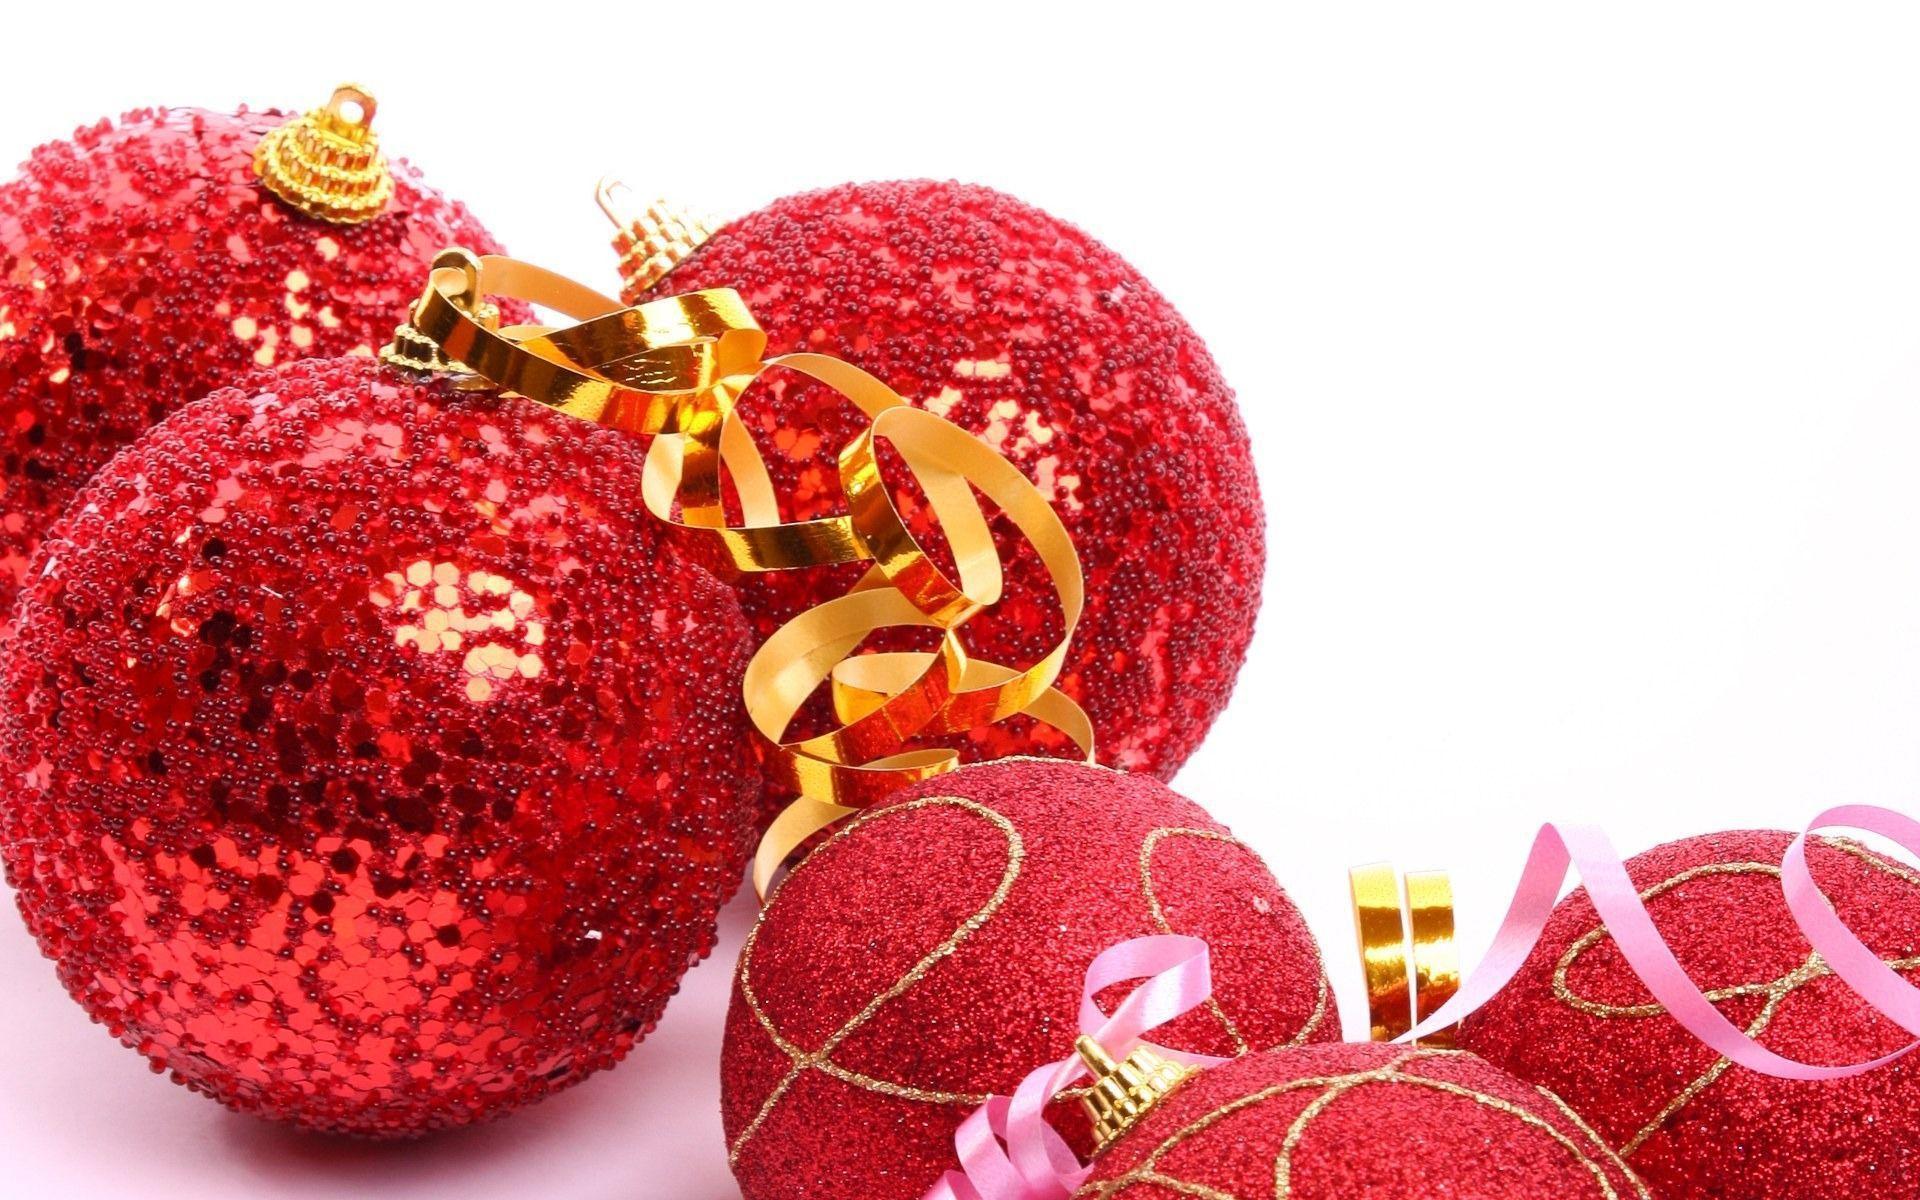 Merry Christmas tree decoration ball ornaments